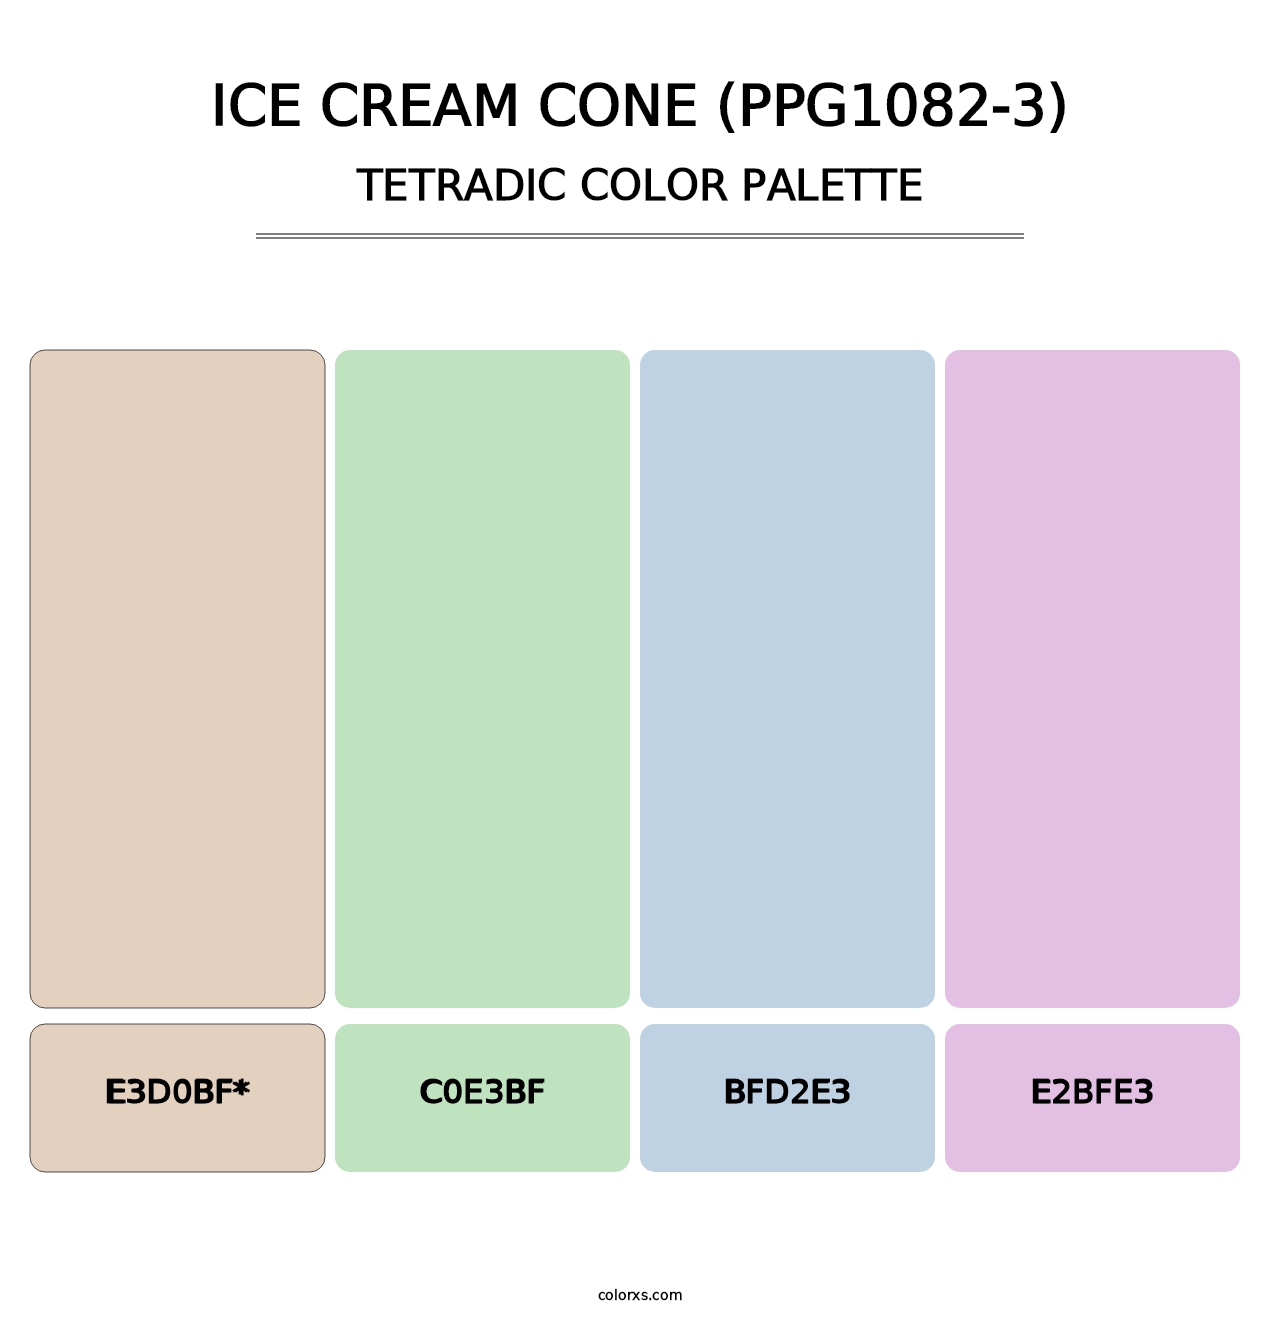 Ice Cream Cone (PPG1082-3) - Tetradic Color Palette